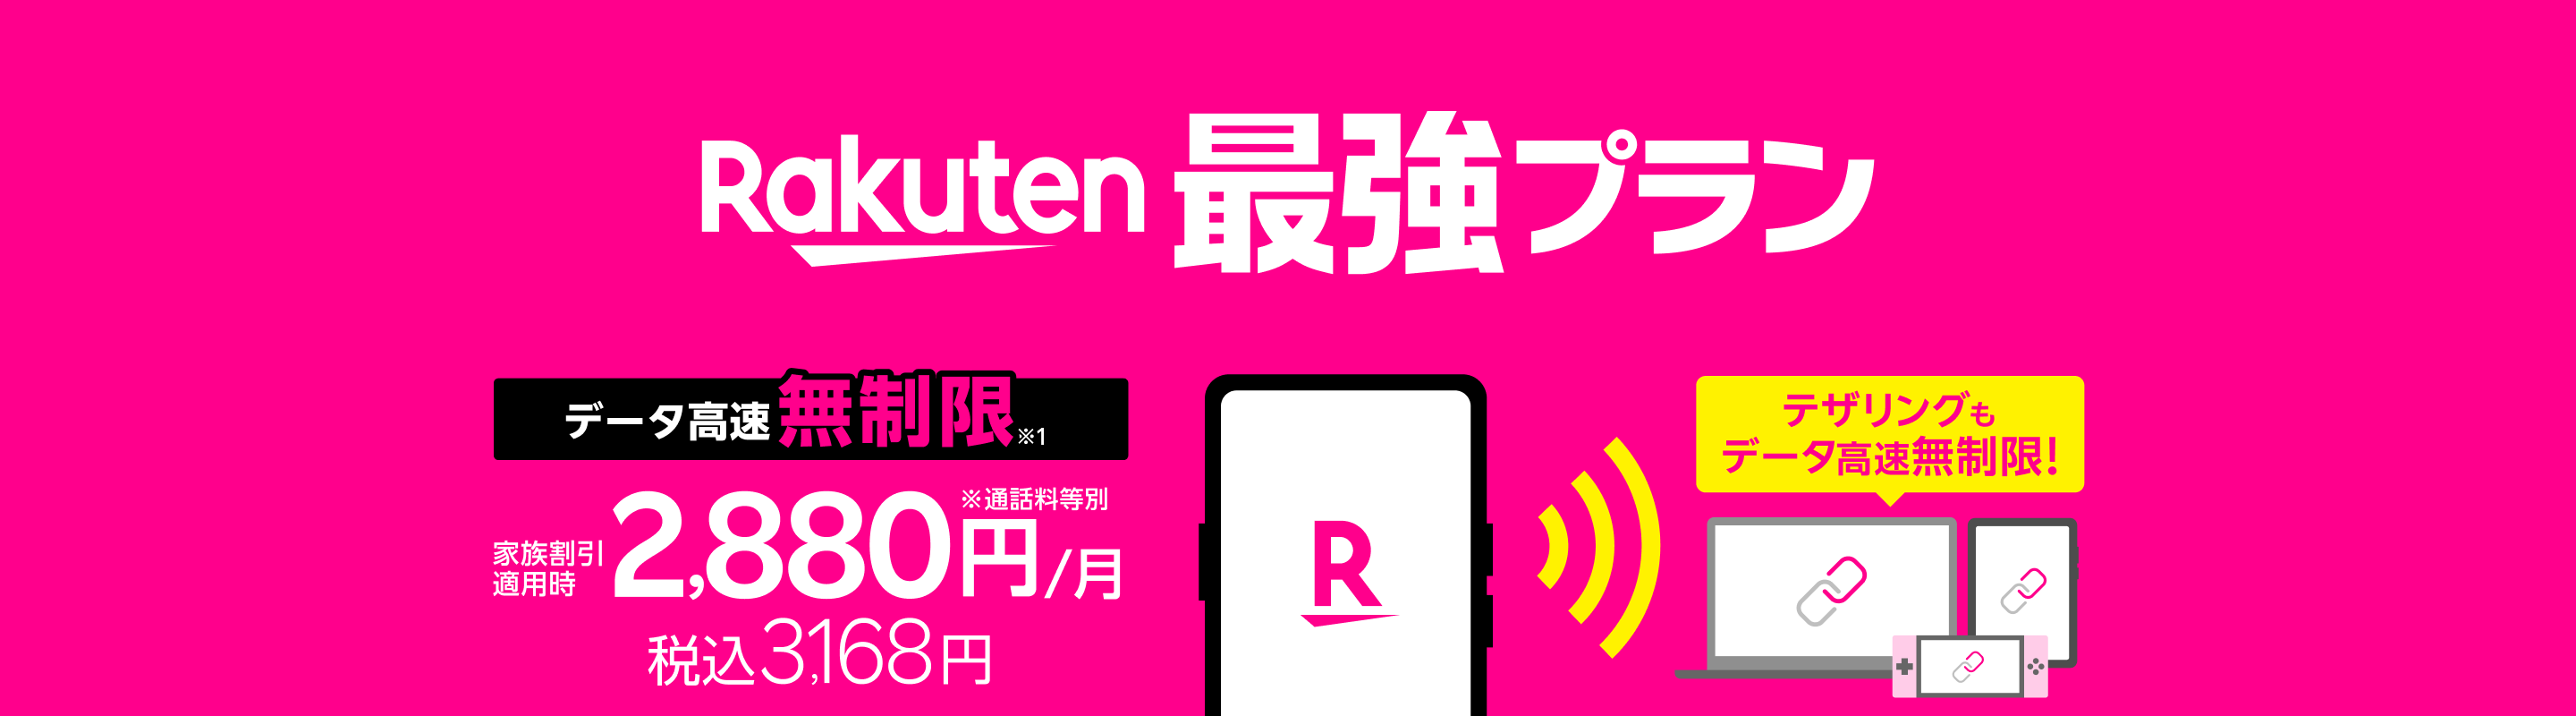 「Rakuten最強プラン」は、データ高速無制限※1で家族割引適用時なら2,880円/月（税込3,168円）